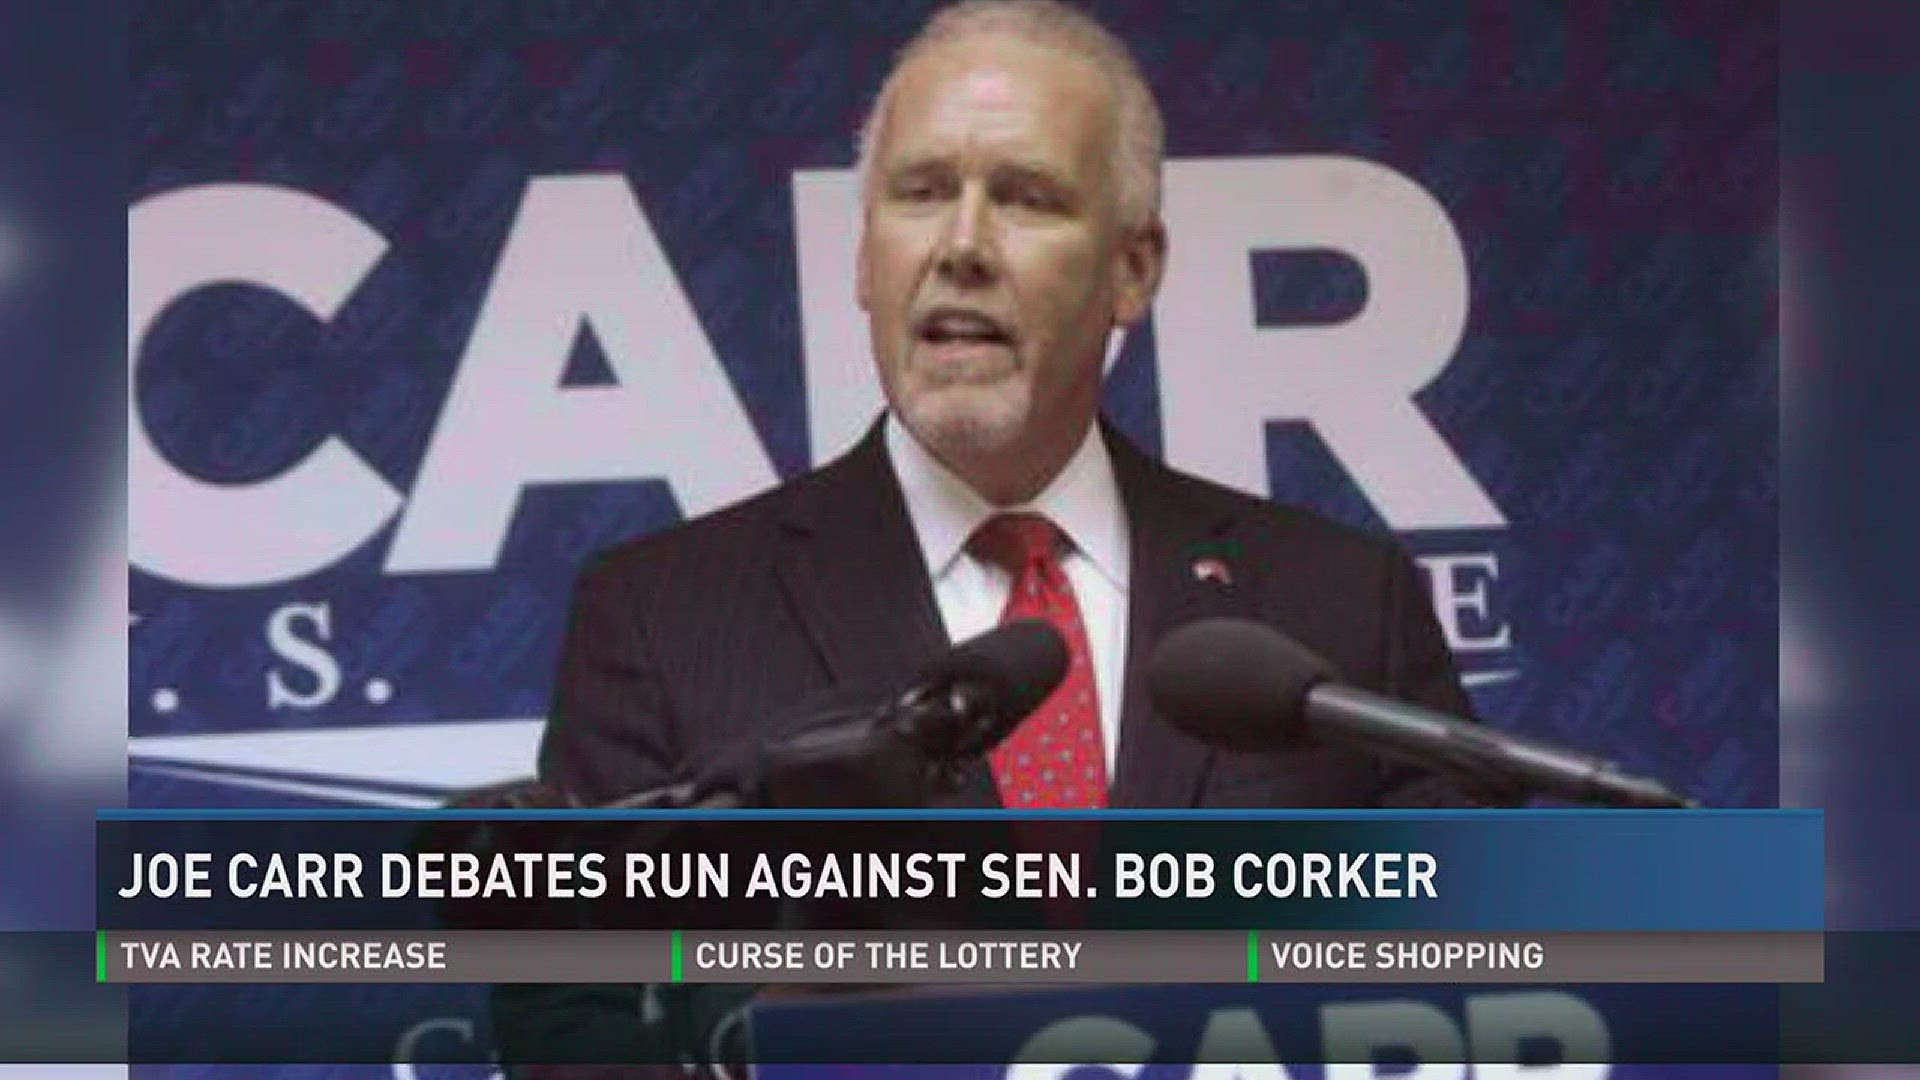 Aug. 23, 2017: Former state Rep. Joe Carr says he's debating on running against U.S. Sen. Bob Corker in 2018.